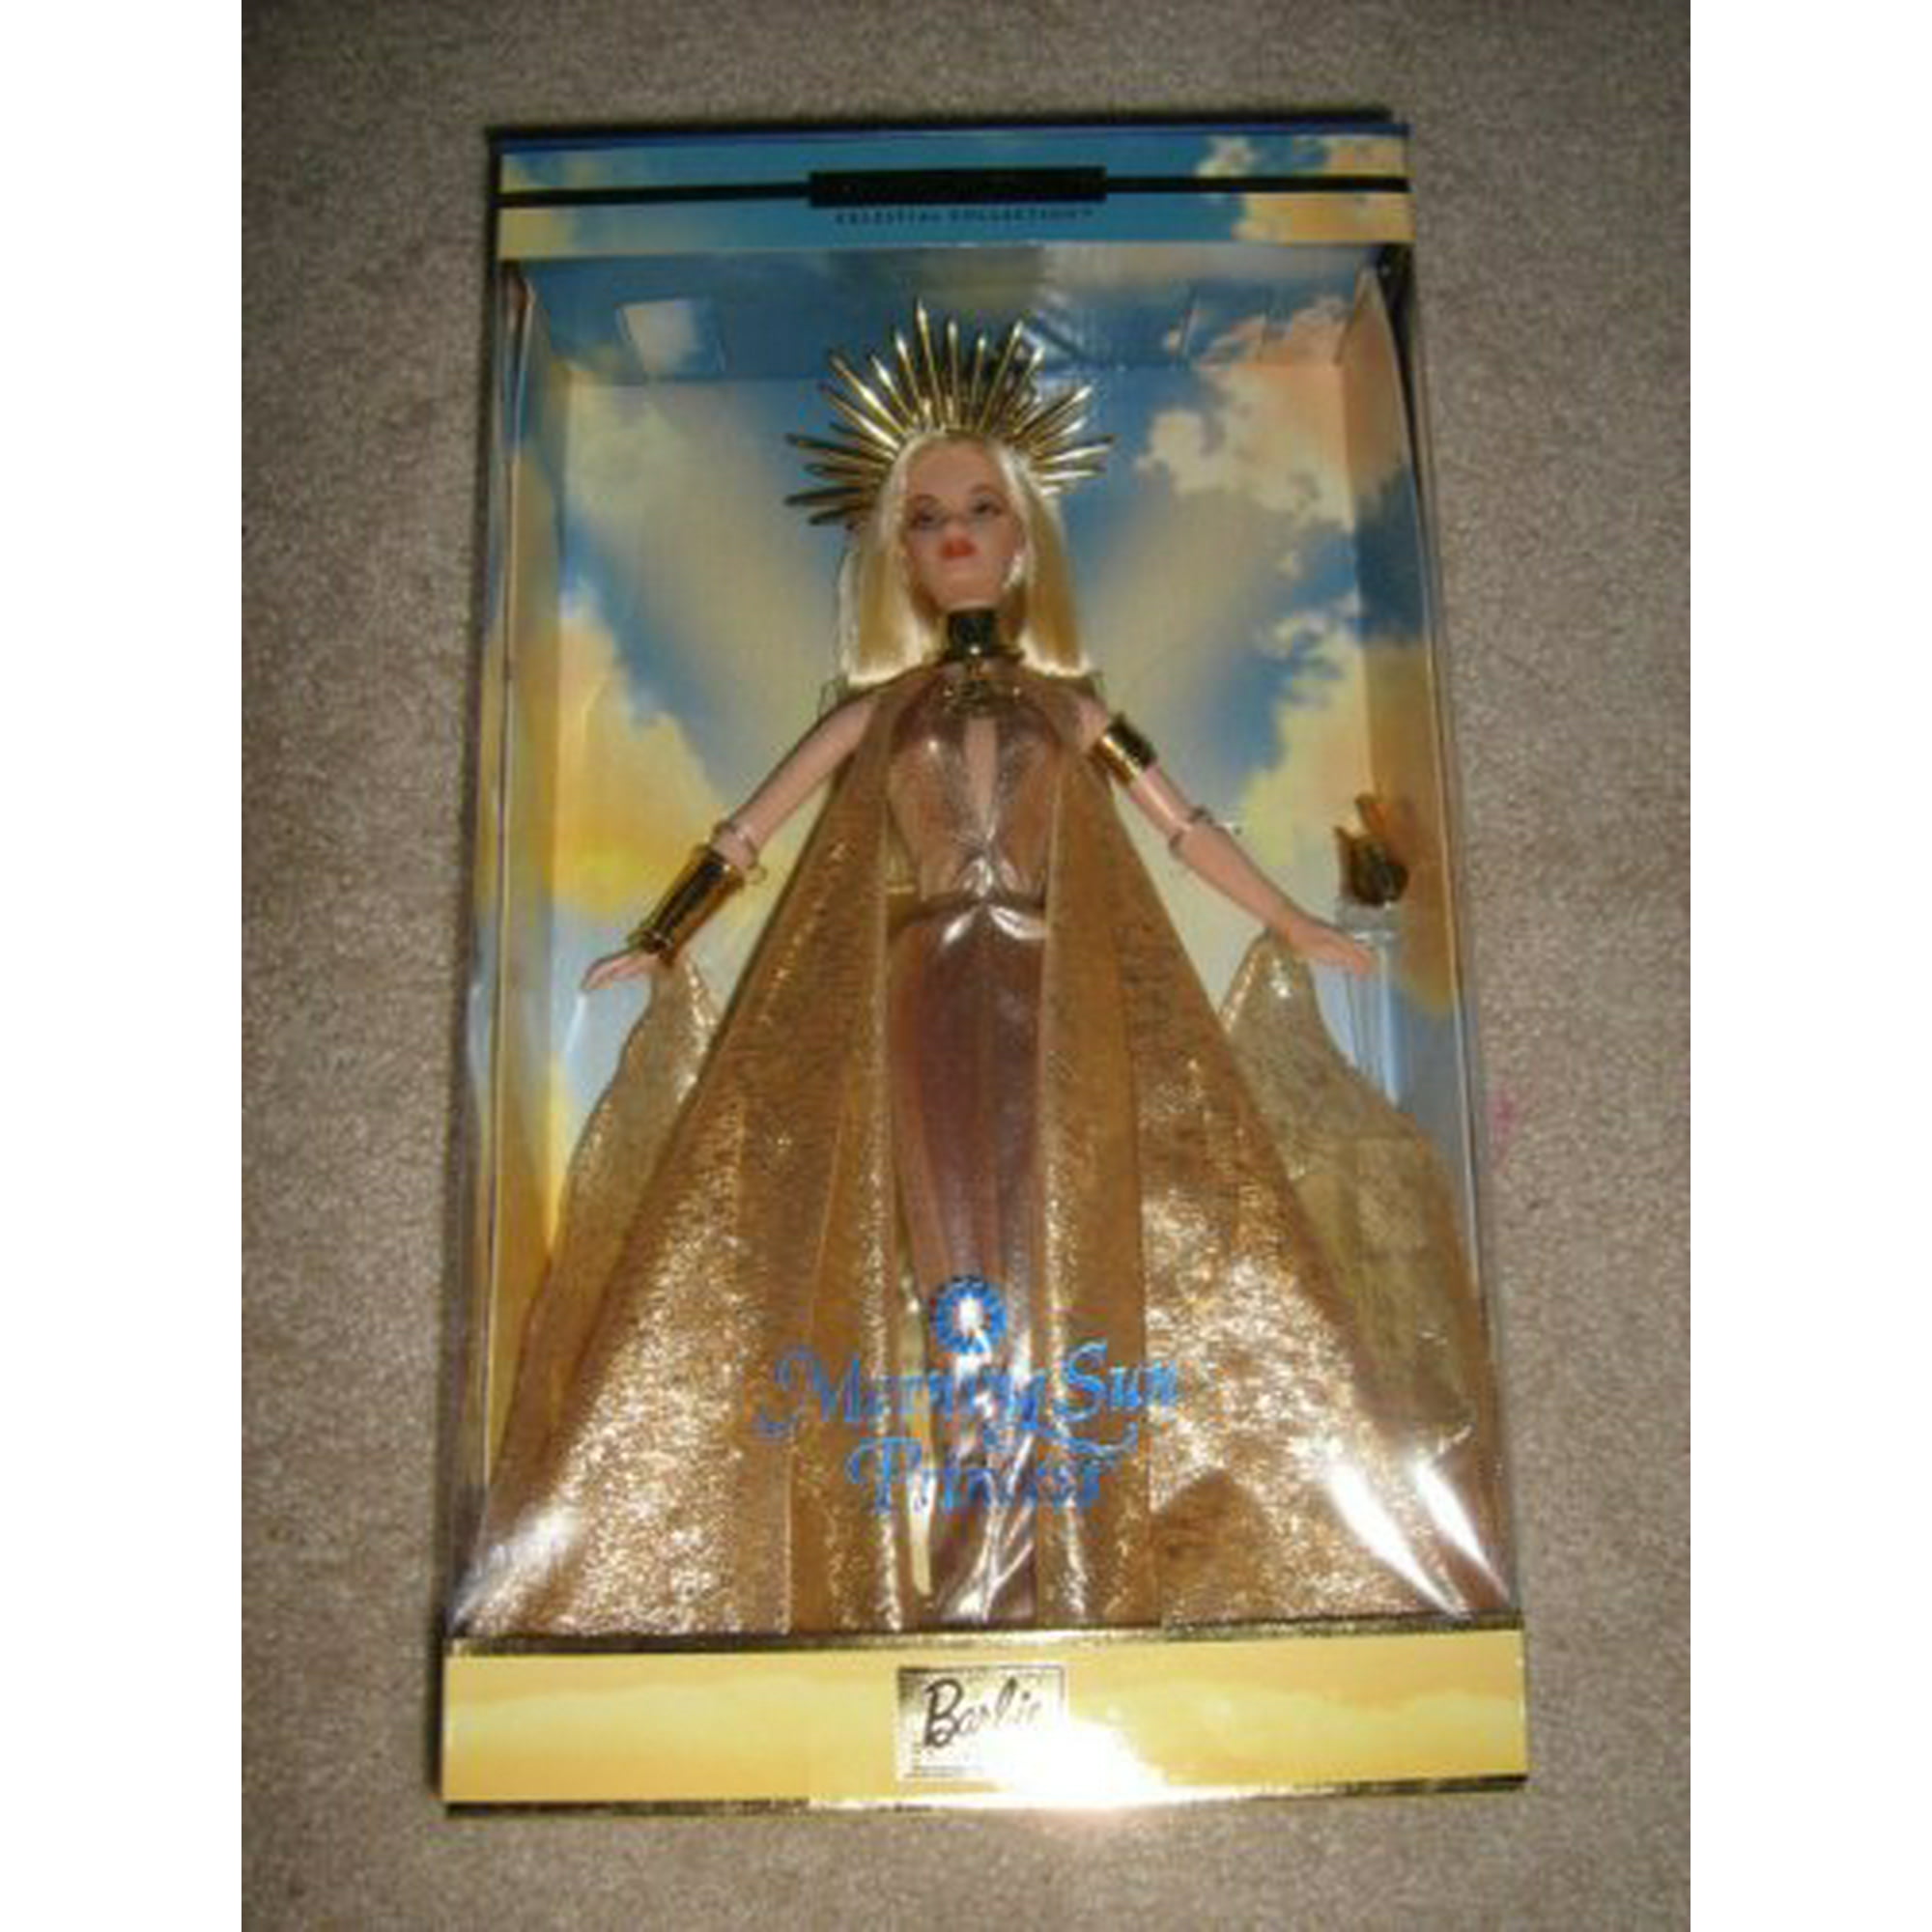 Morning Sun Princess 2000 Barbie Doll for sale online 